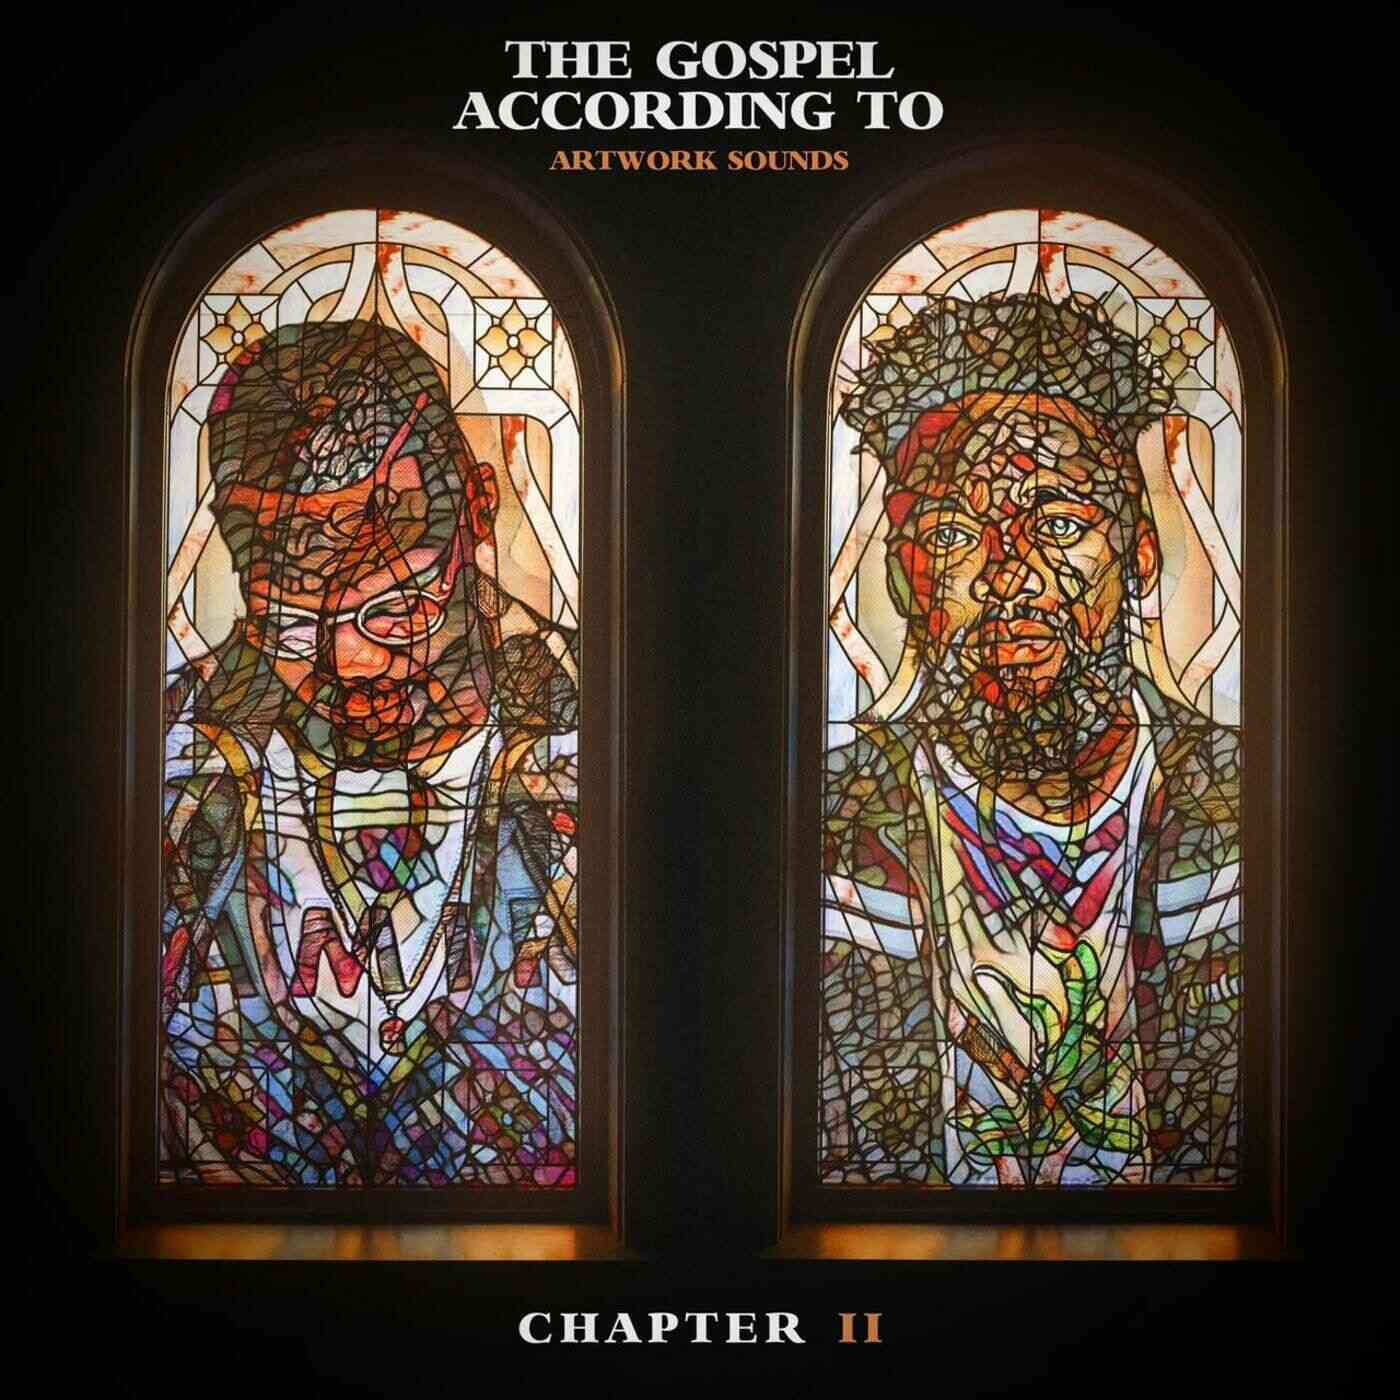 Artwork Sounds - The Gospel According to Chapter II Album 